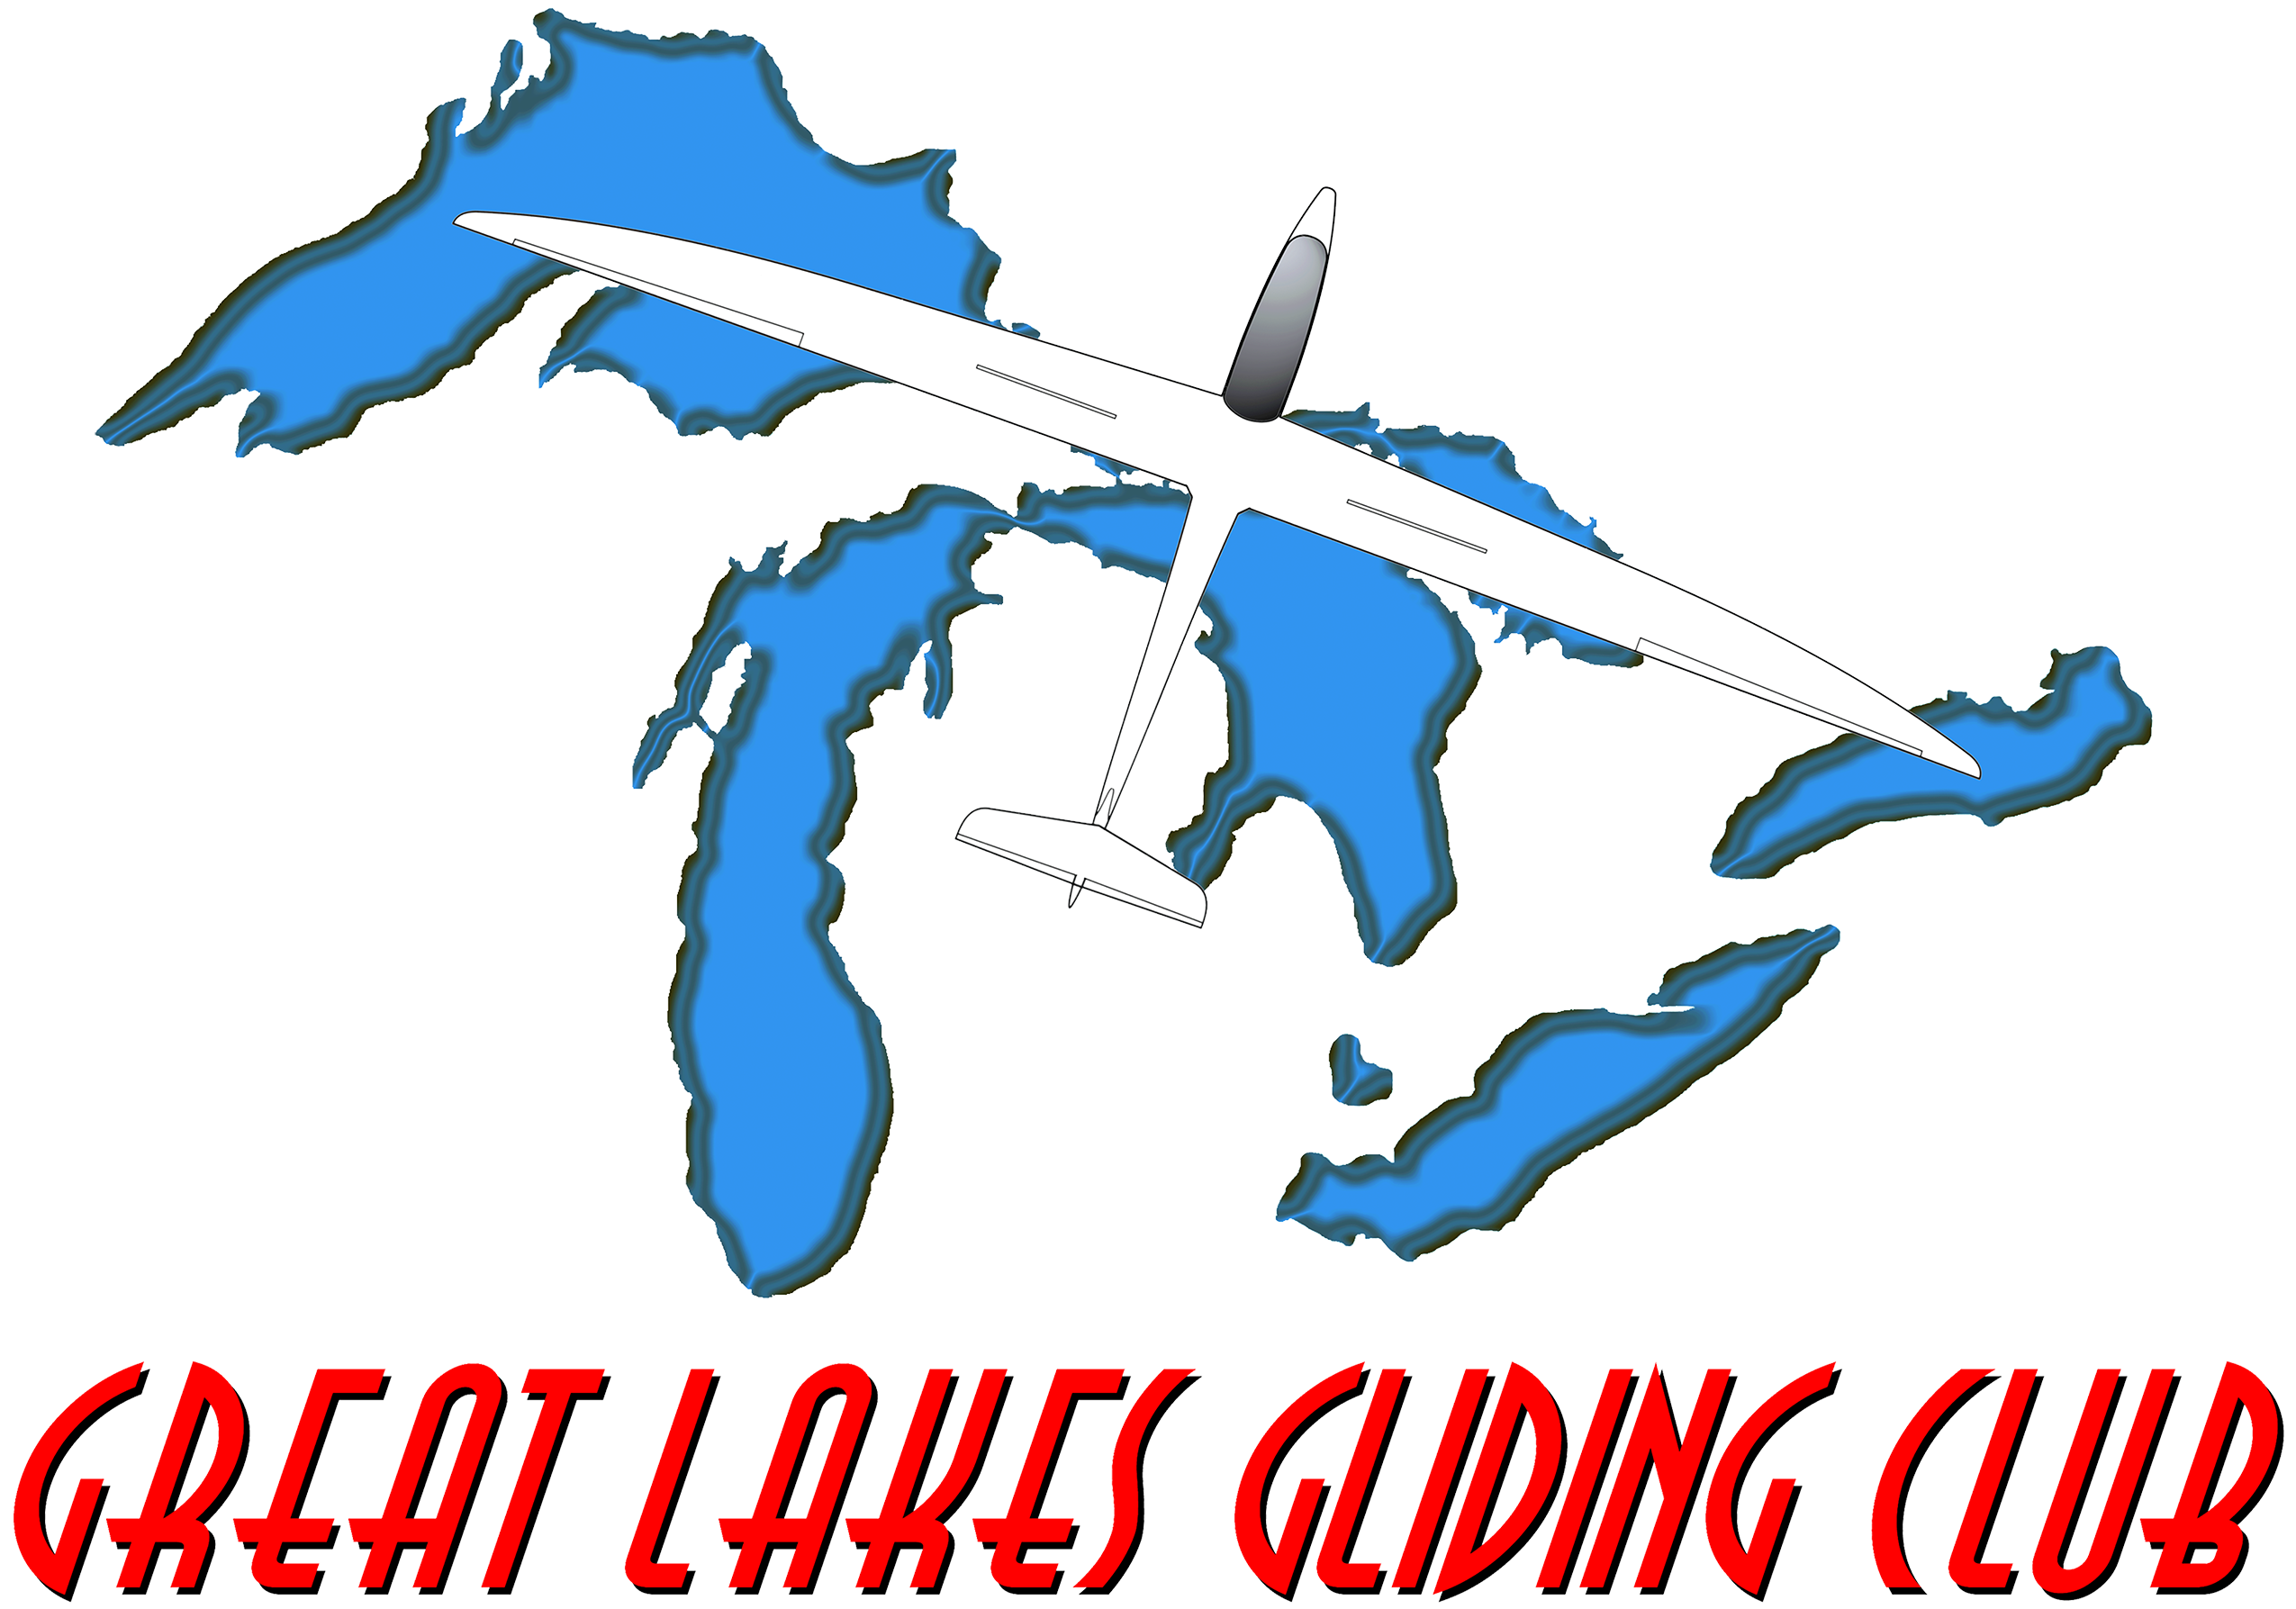 Great Lakes Gliding Club